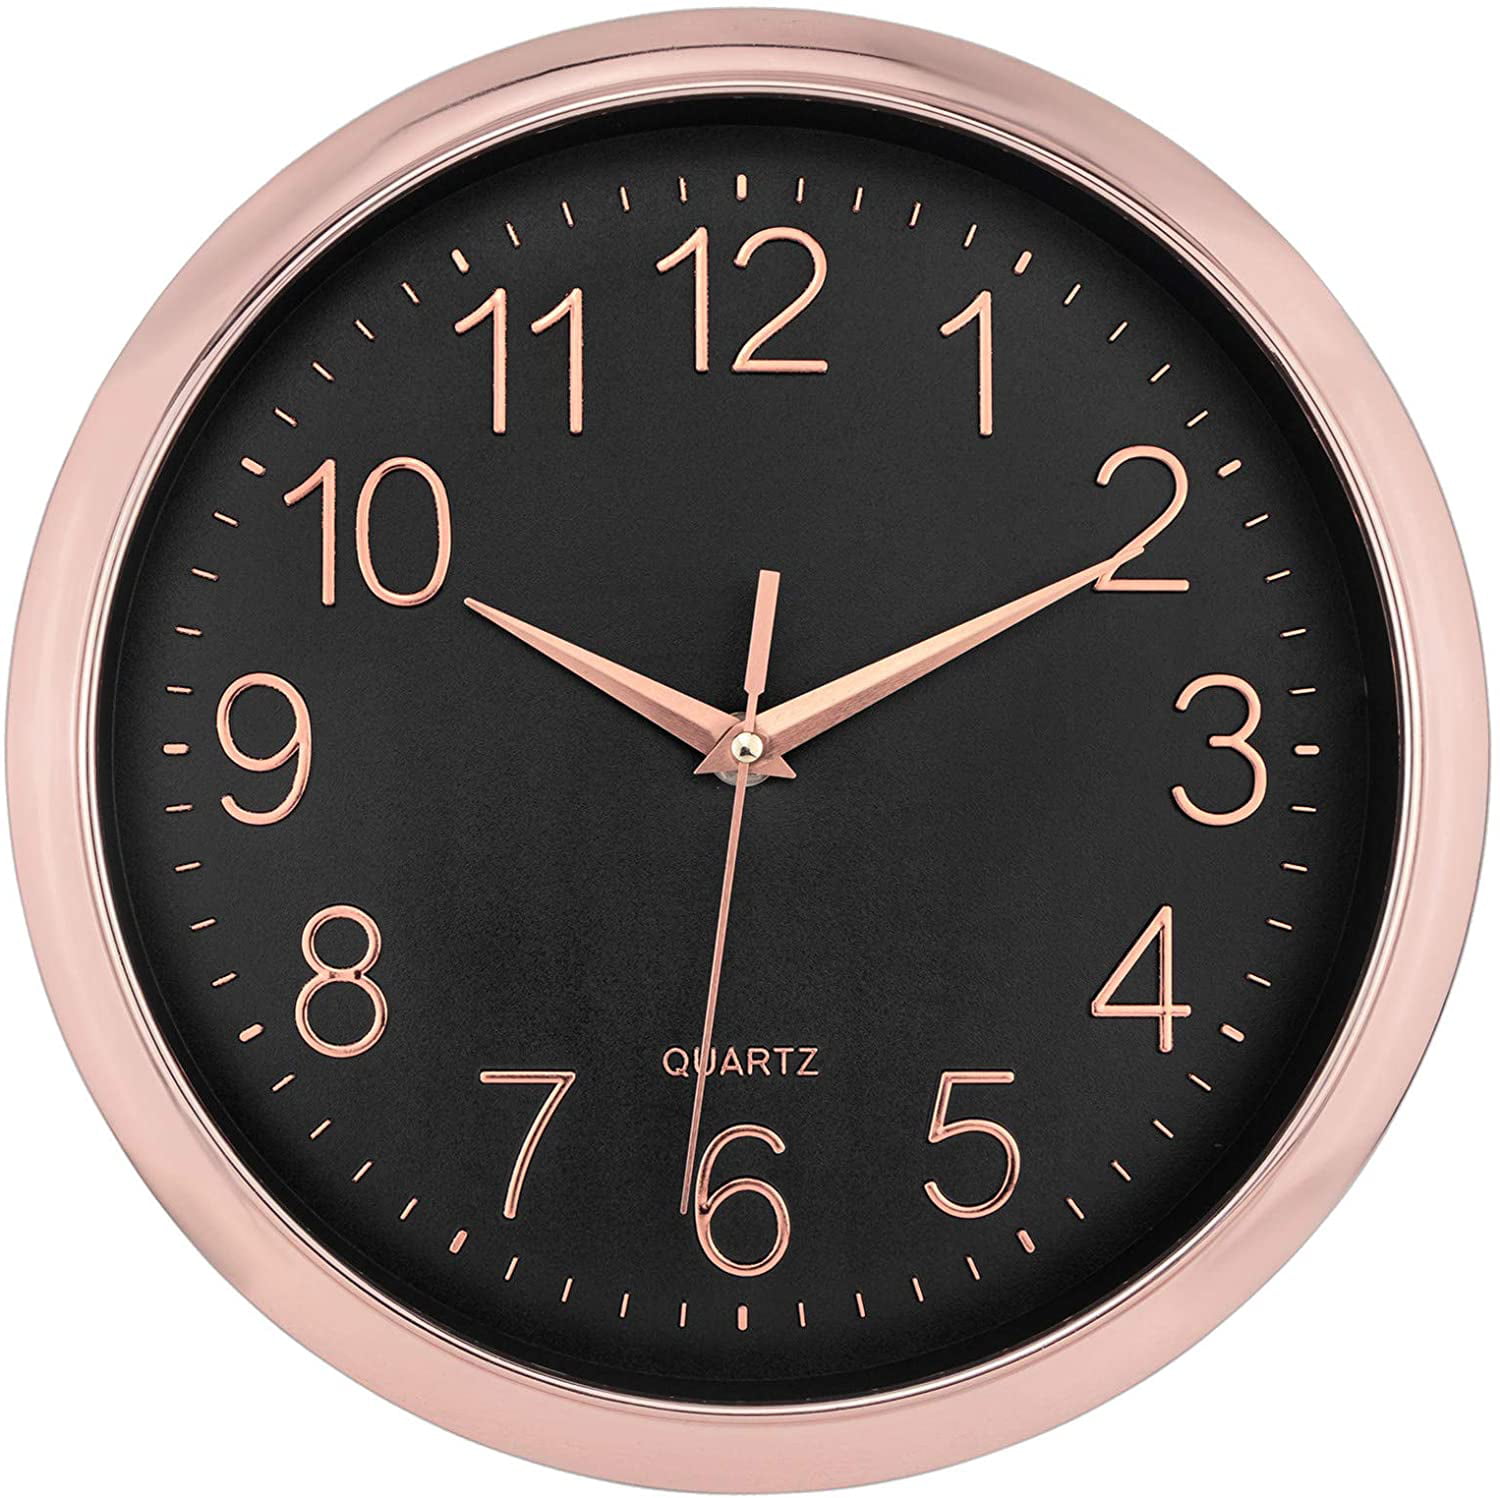 14 Inch Retro Wall Clock,Rose Paris Style Wall Clock,Silent Non-Ticking 